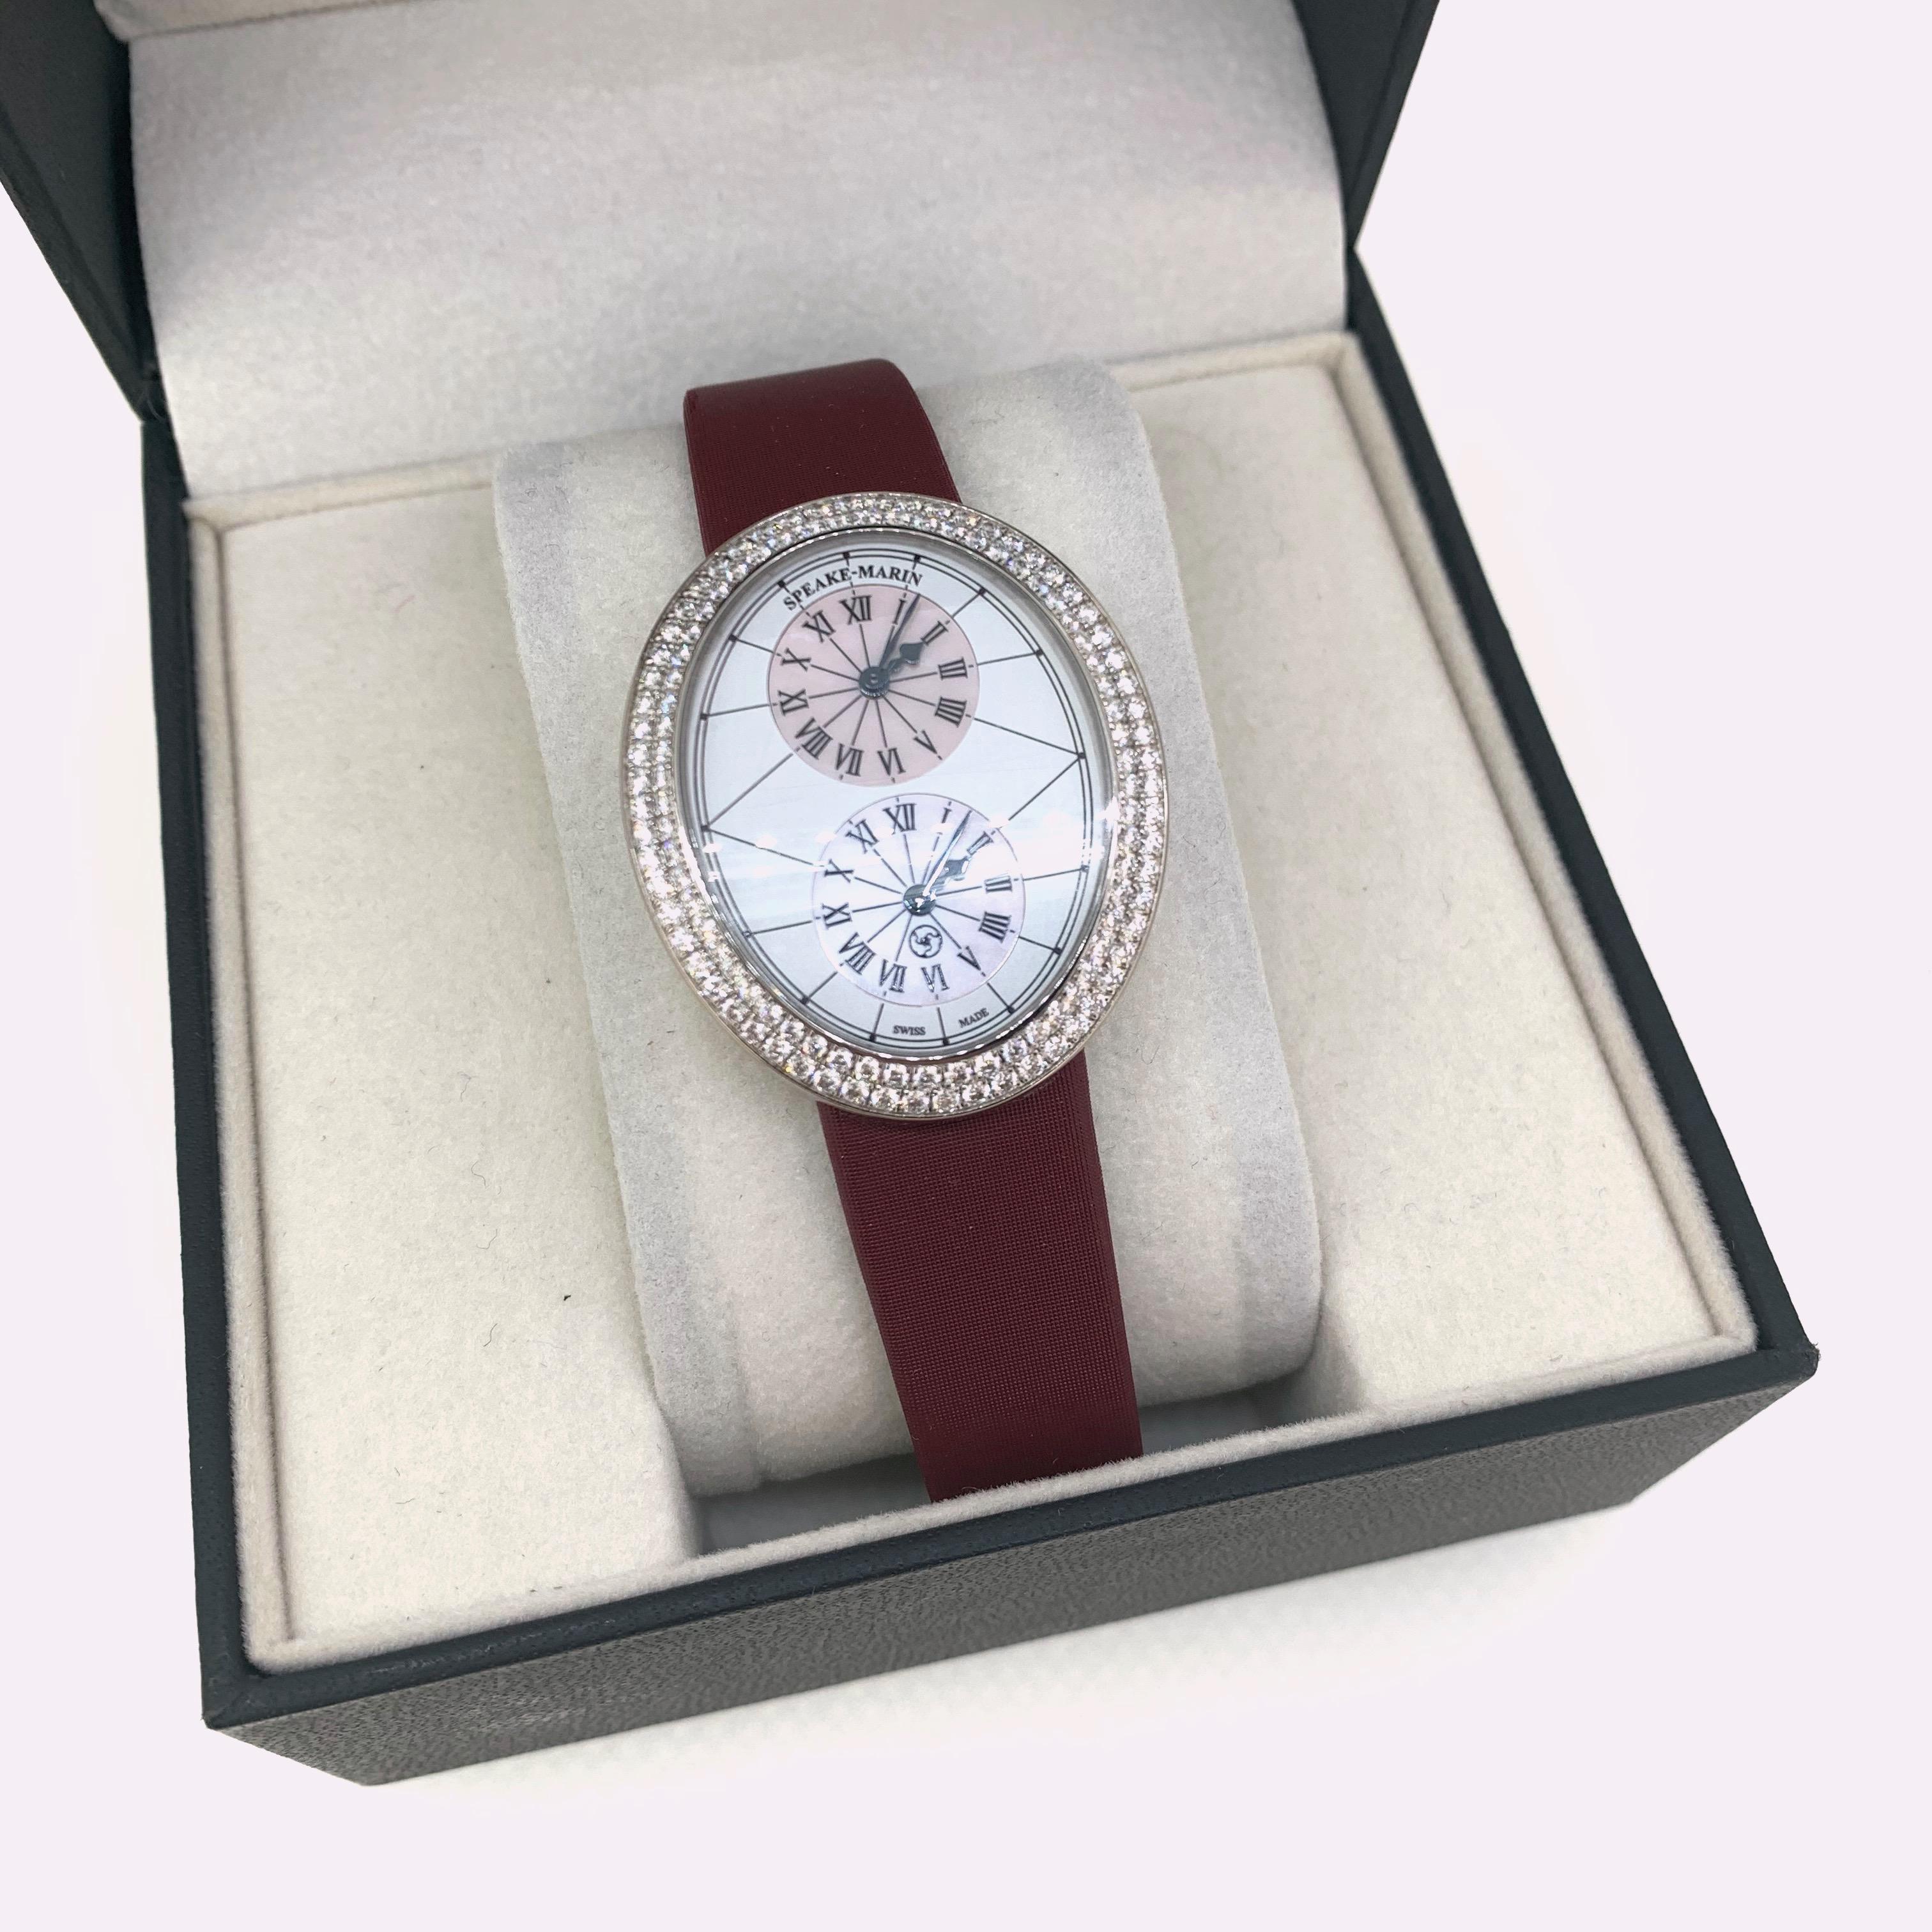 Speake-Marin Shenandoah Dual Timezone White Gold Women's Watch For Sale 3